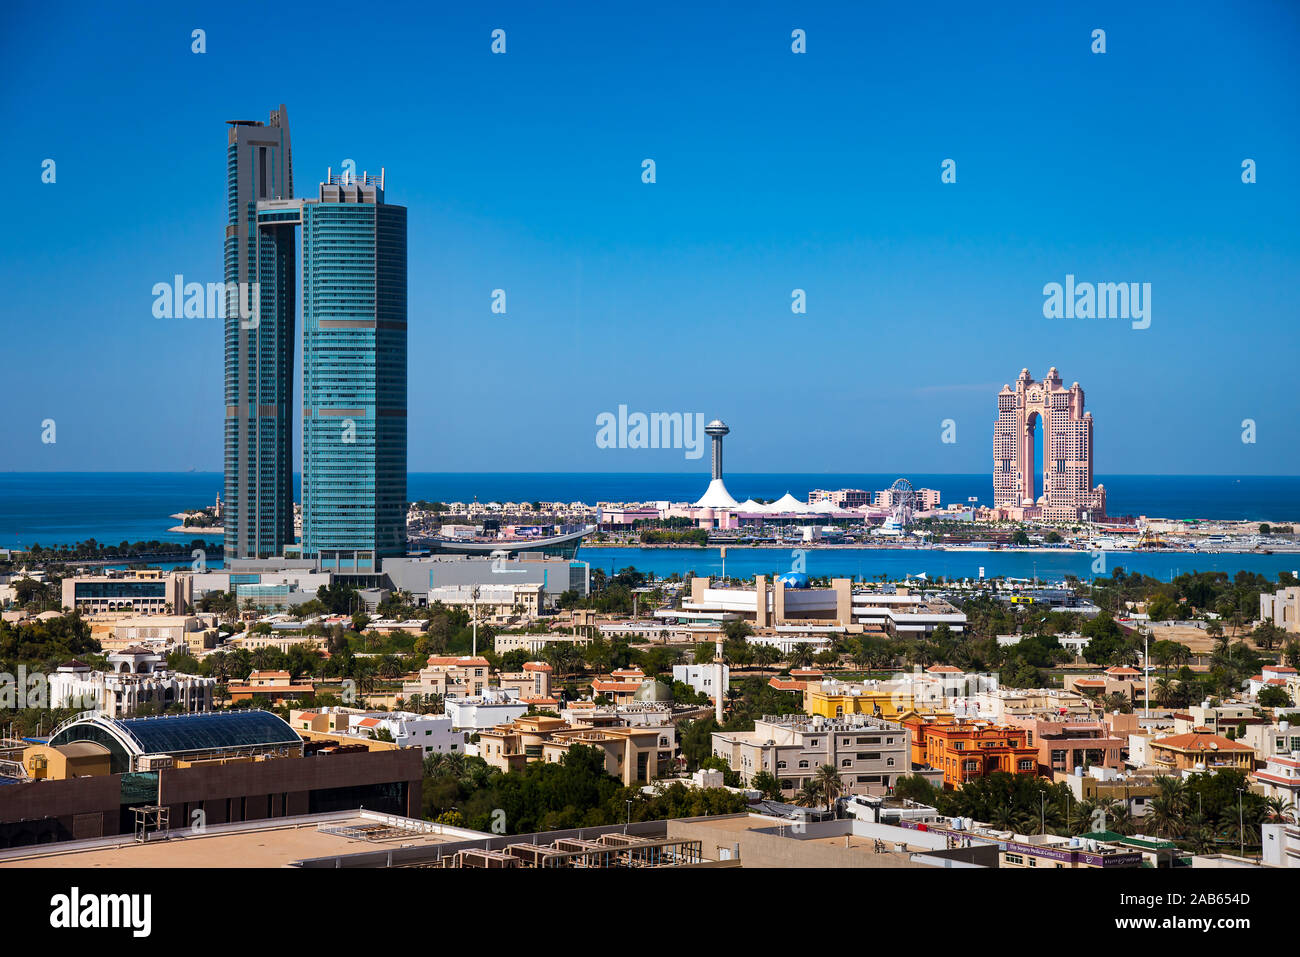 Al Marina island in downtown Abu Dhabi in the United Arab Emirates Stock Photo